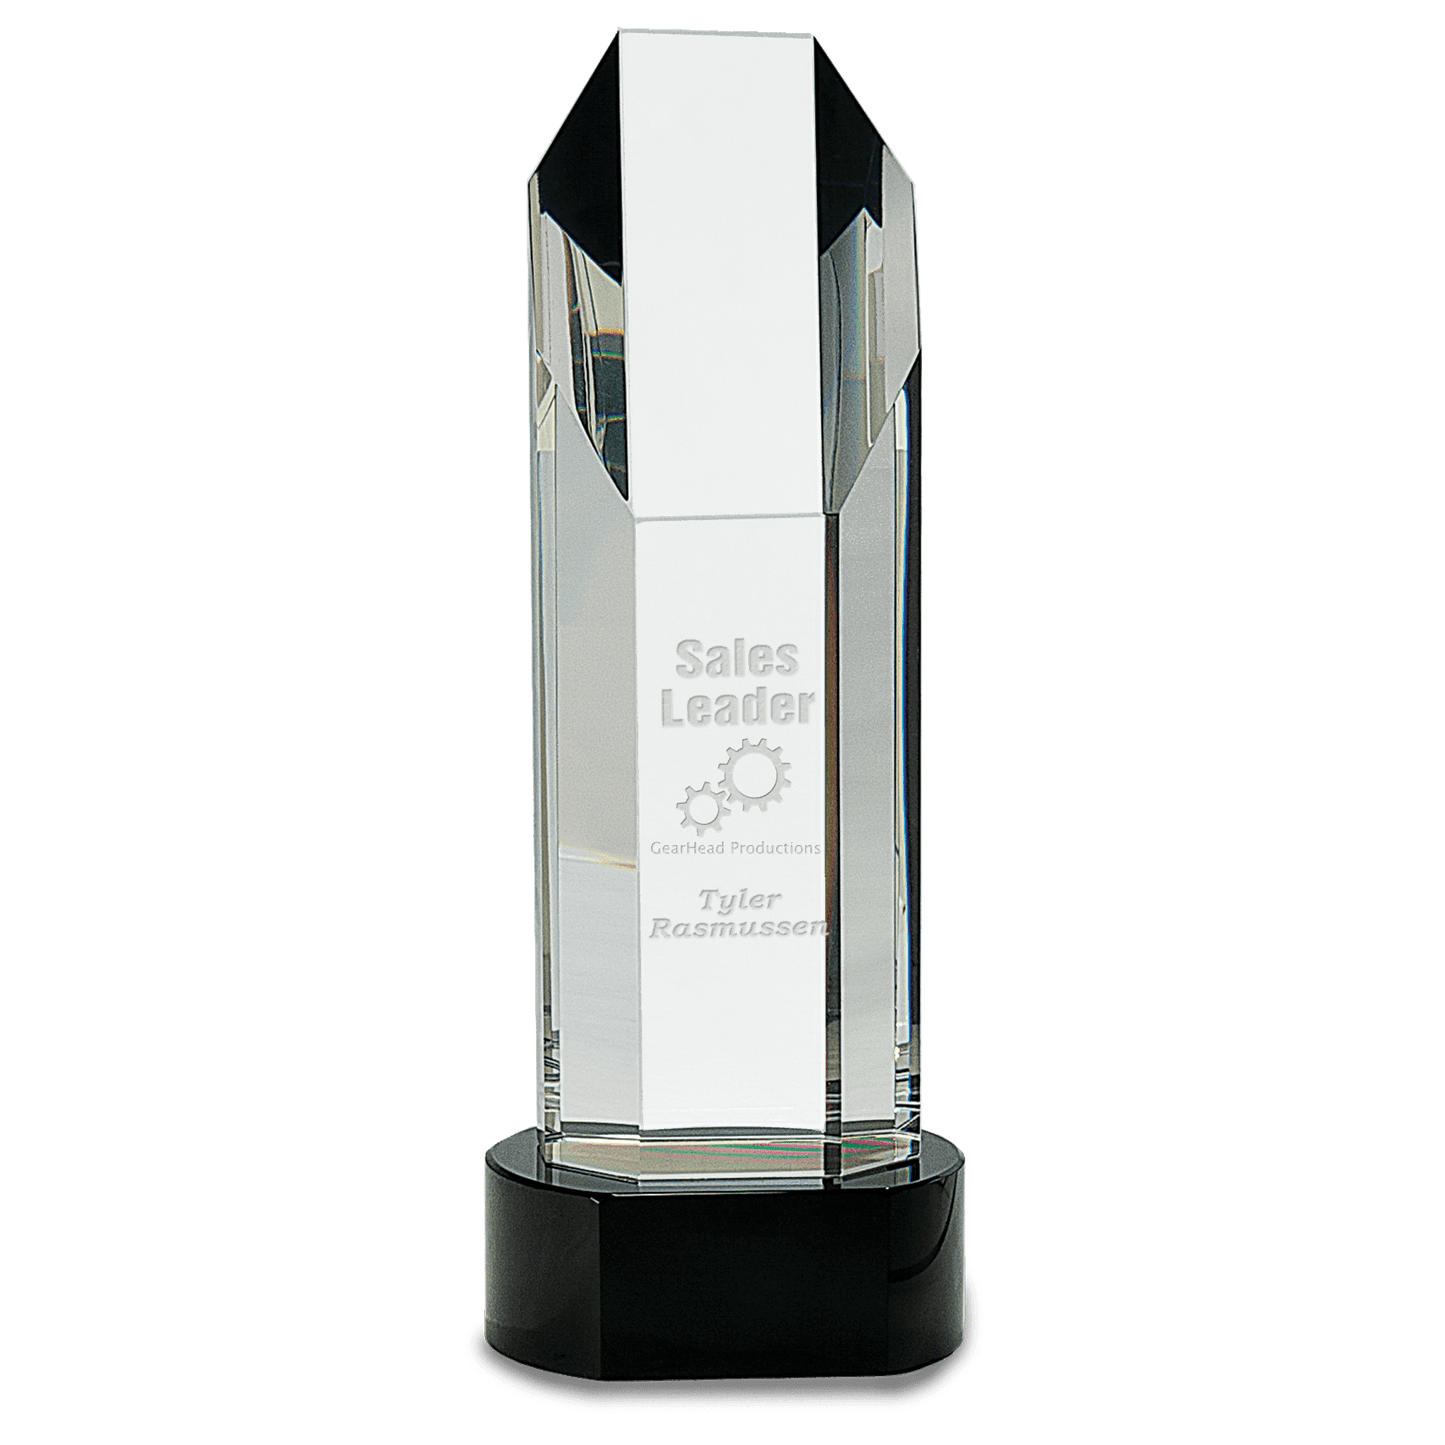 BHCRY004 Octagon Slant-Top Crystal Award on Black Pedestal Base Corporate Executive Achievement Recognition Sales Award